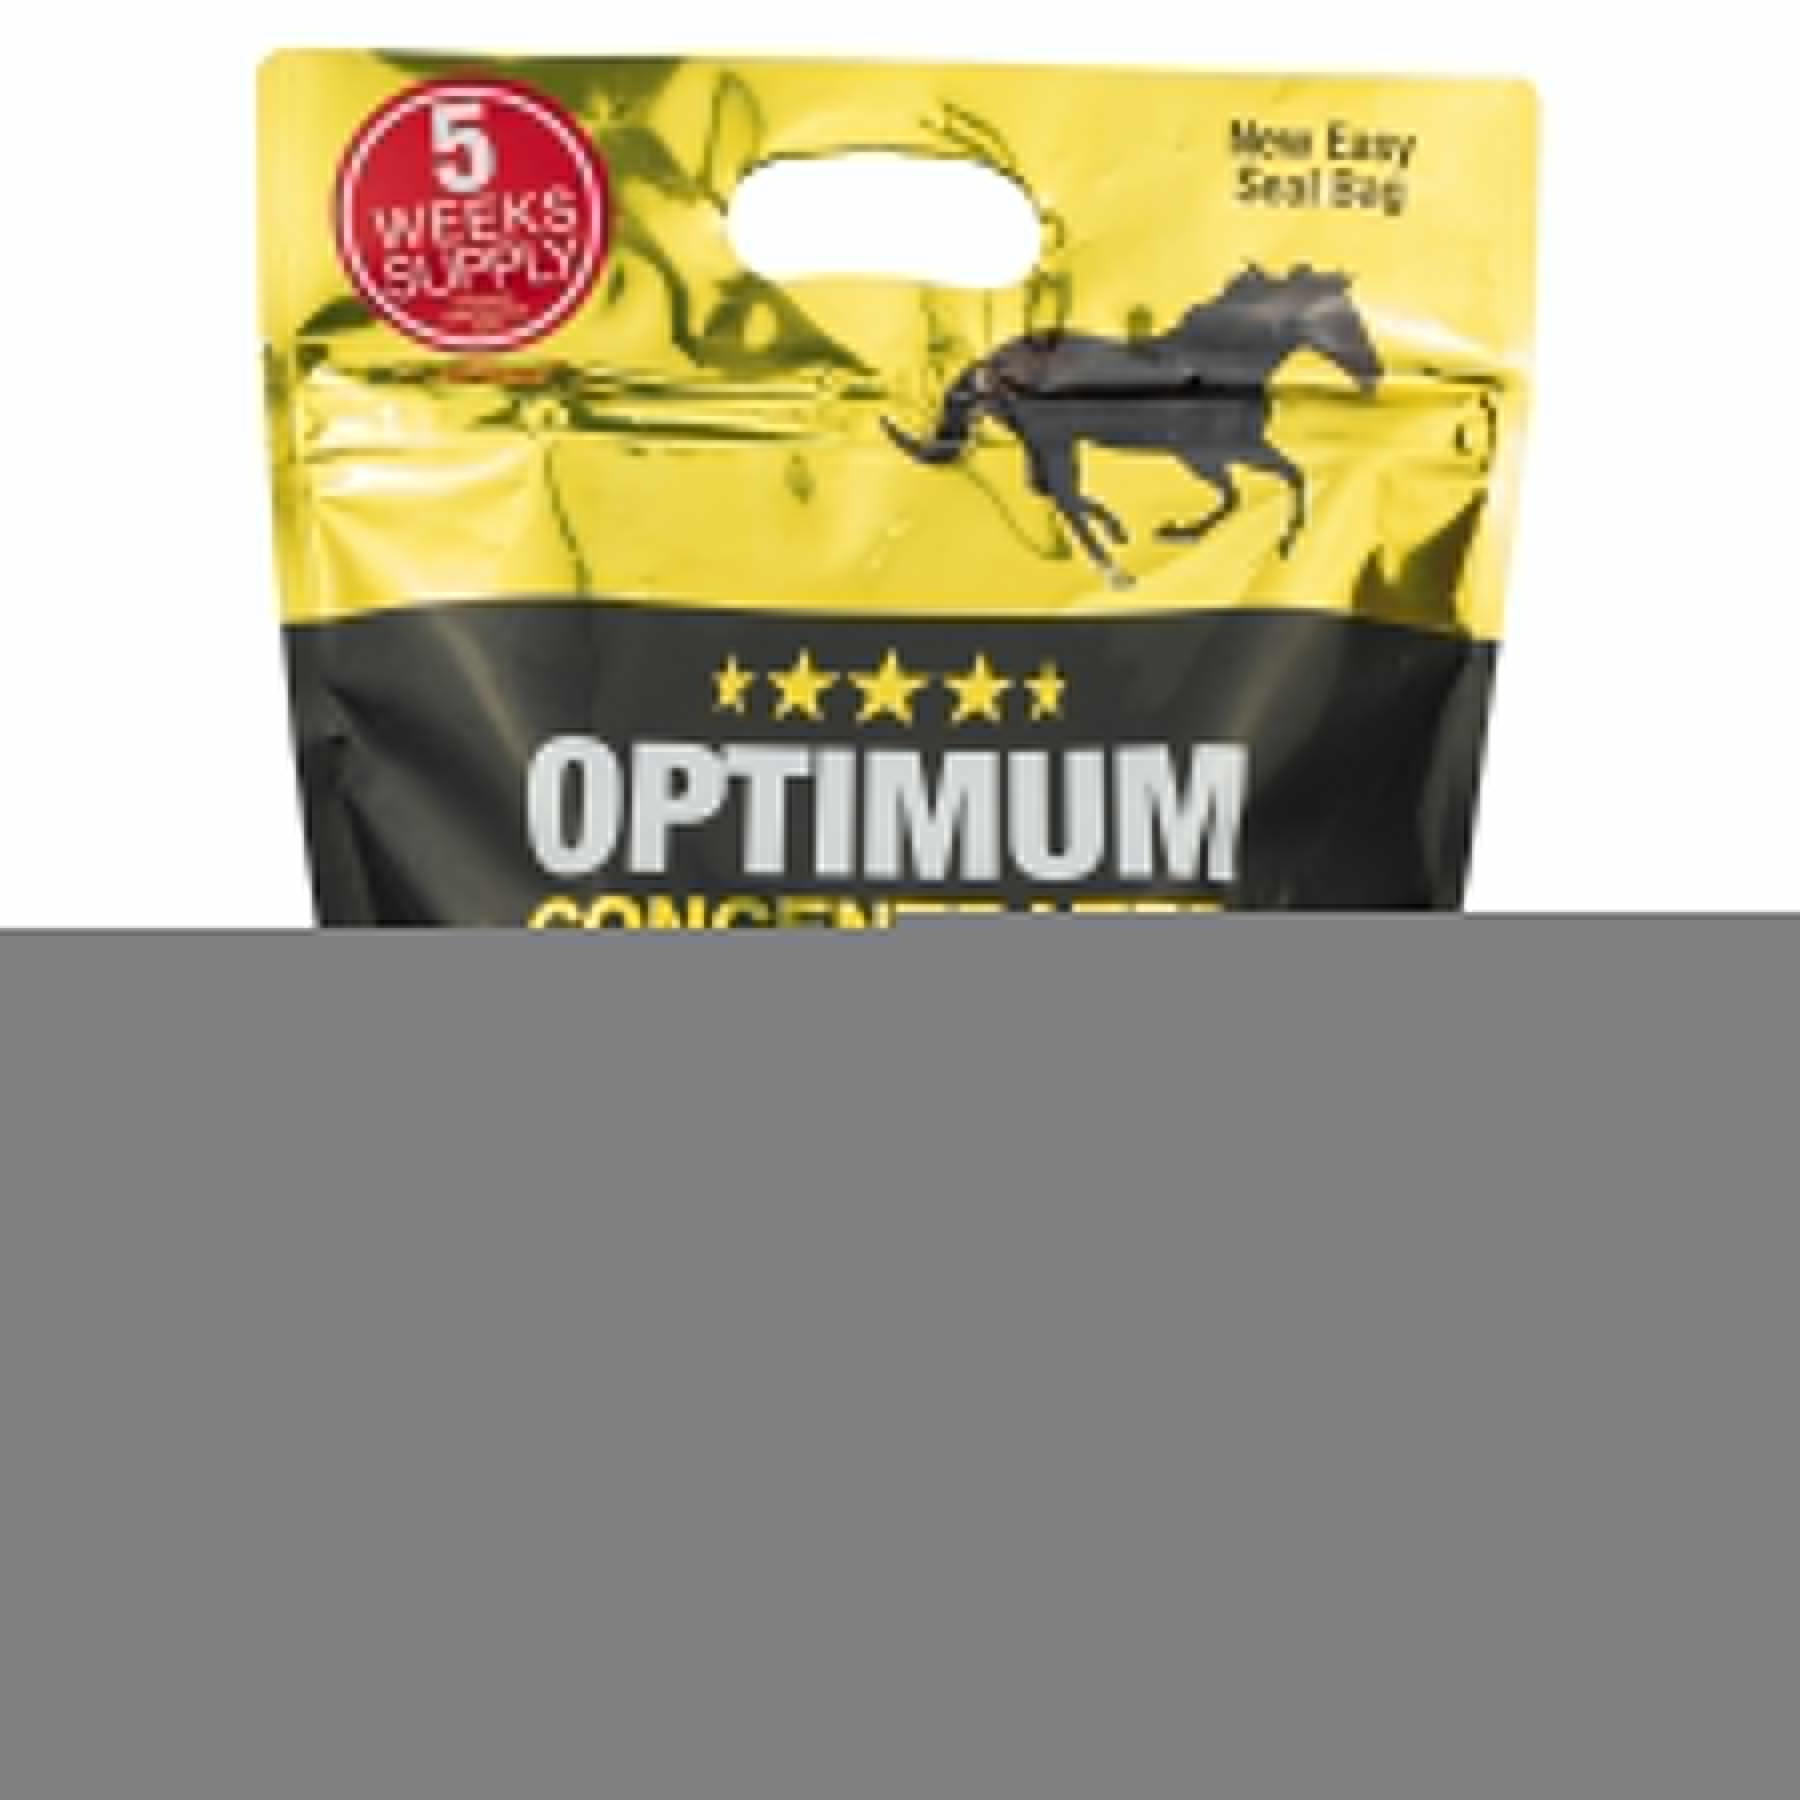 Vitamine e minerali per cavalli NAF Optimum Feed Balancer